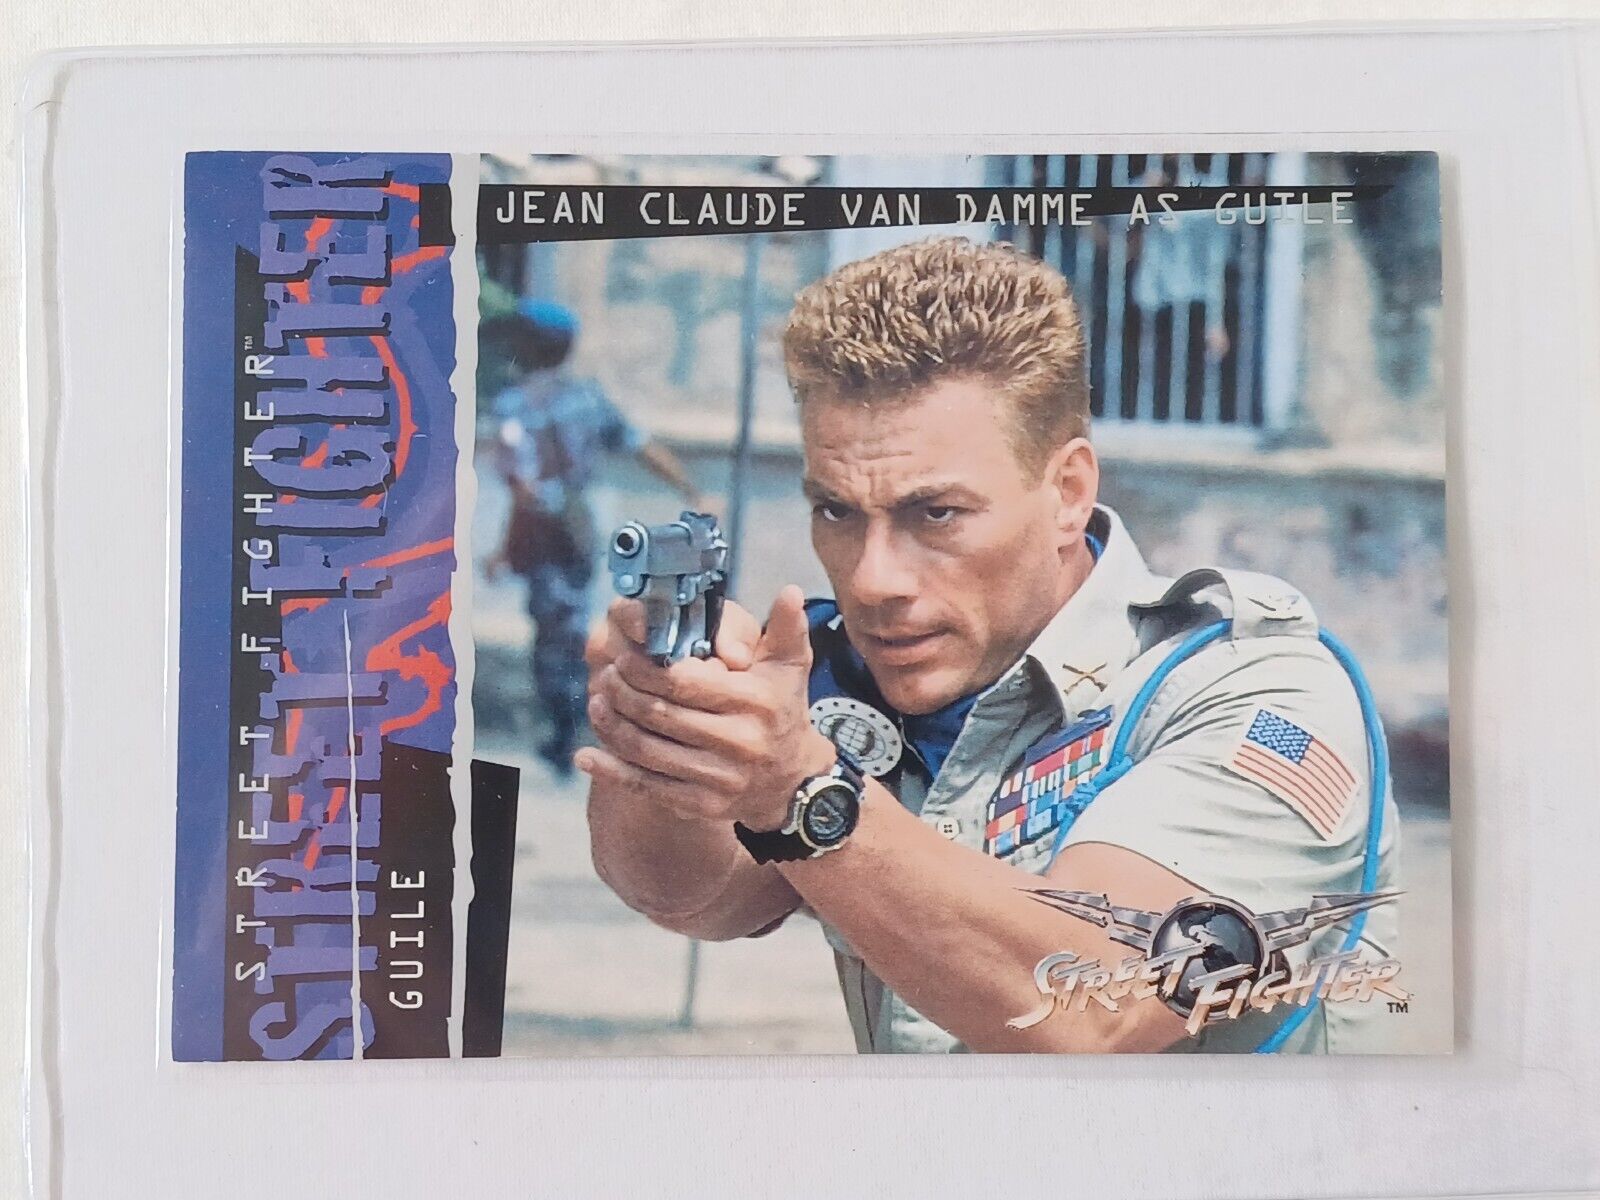 1994 Upper Deck Street Fighter Movie SF1 Jean Claude Van Damme Guile Promo Card